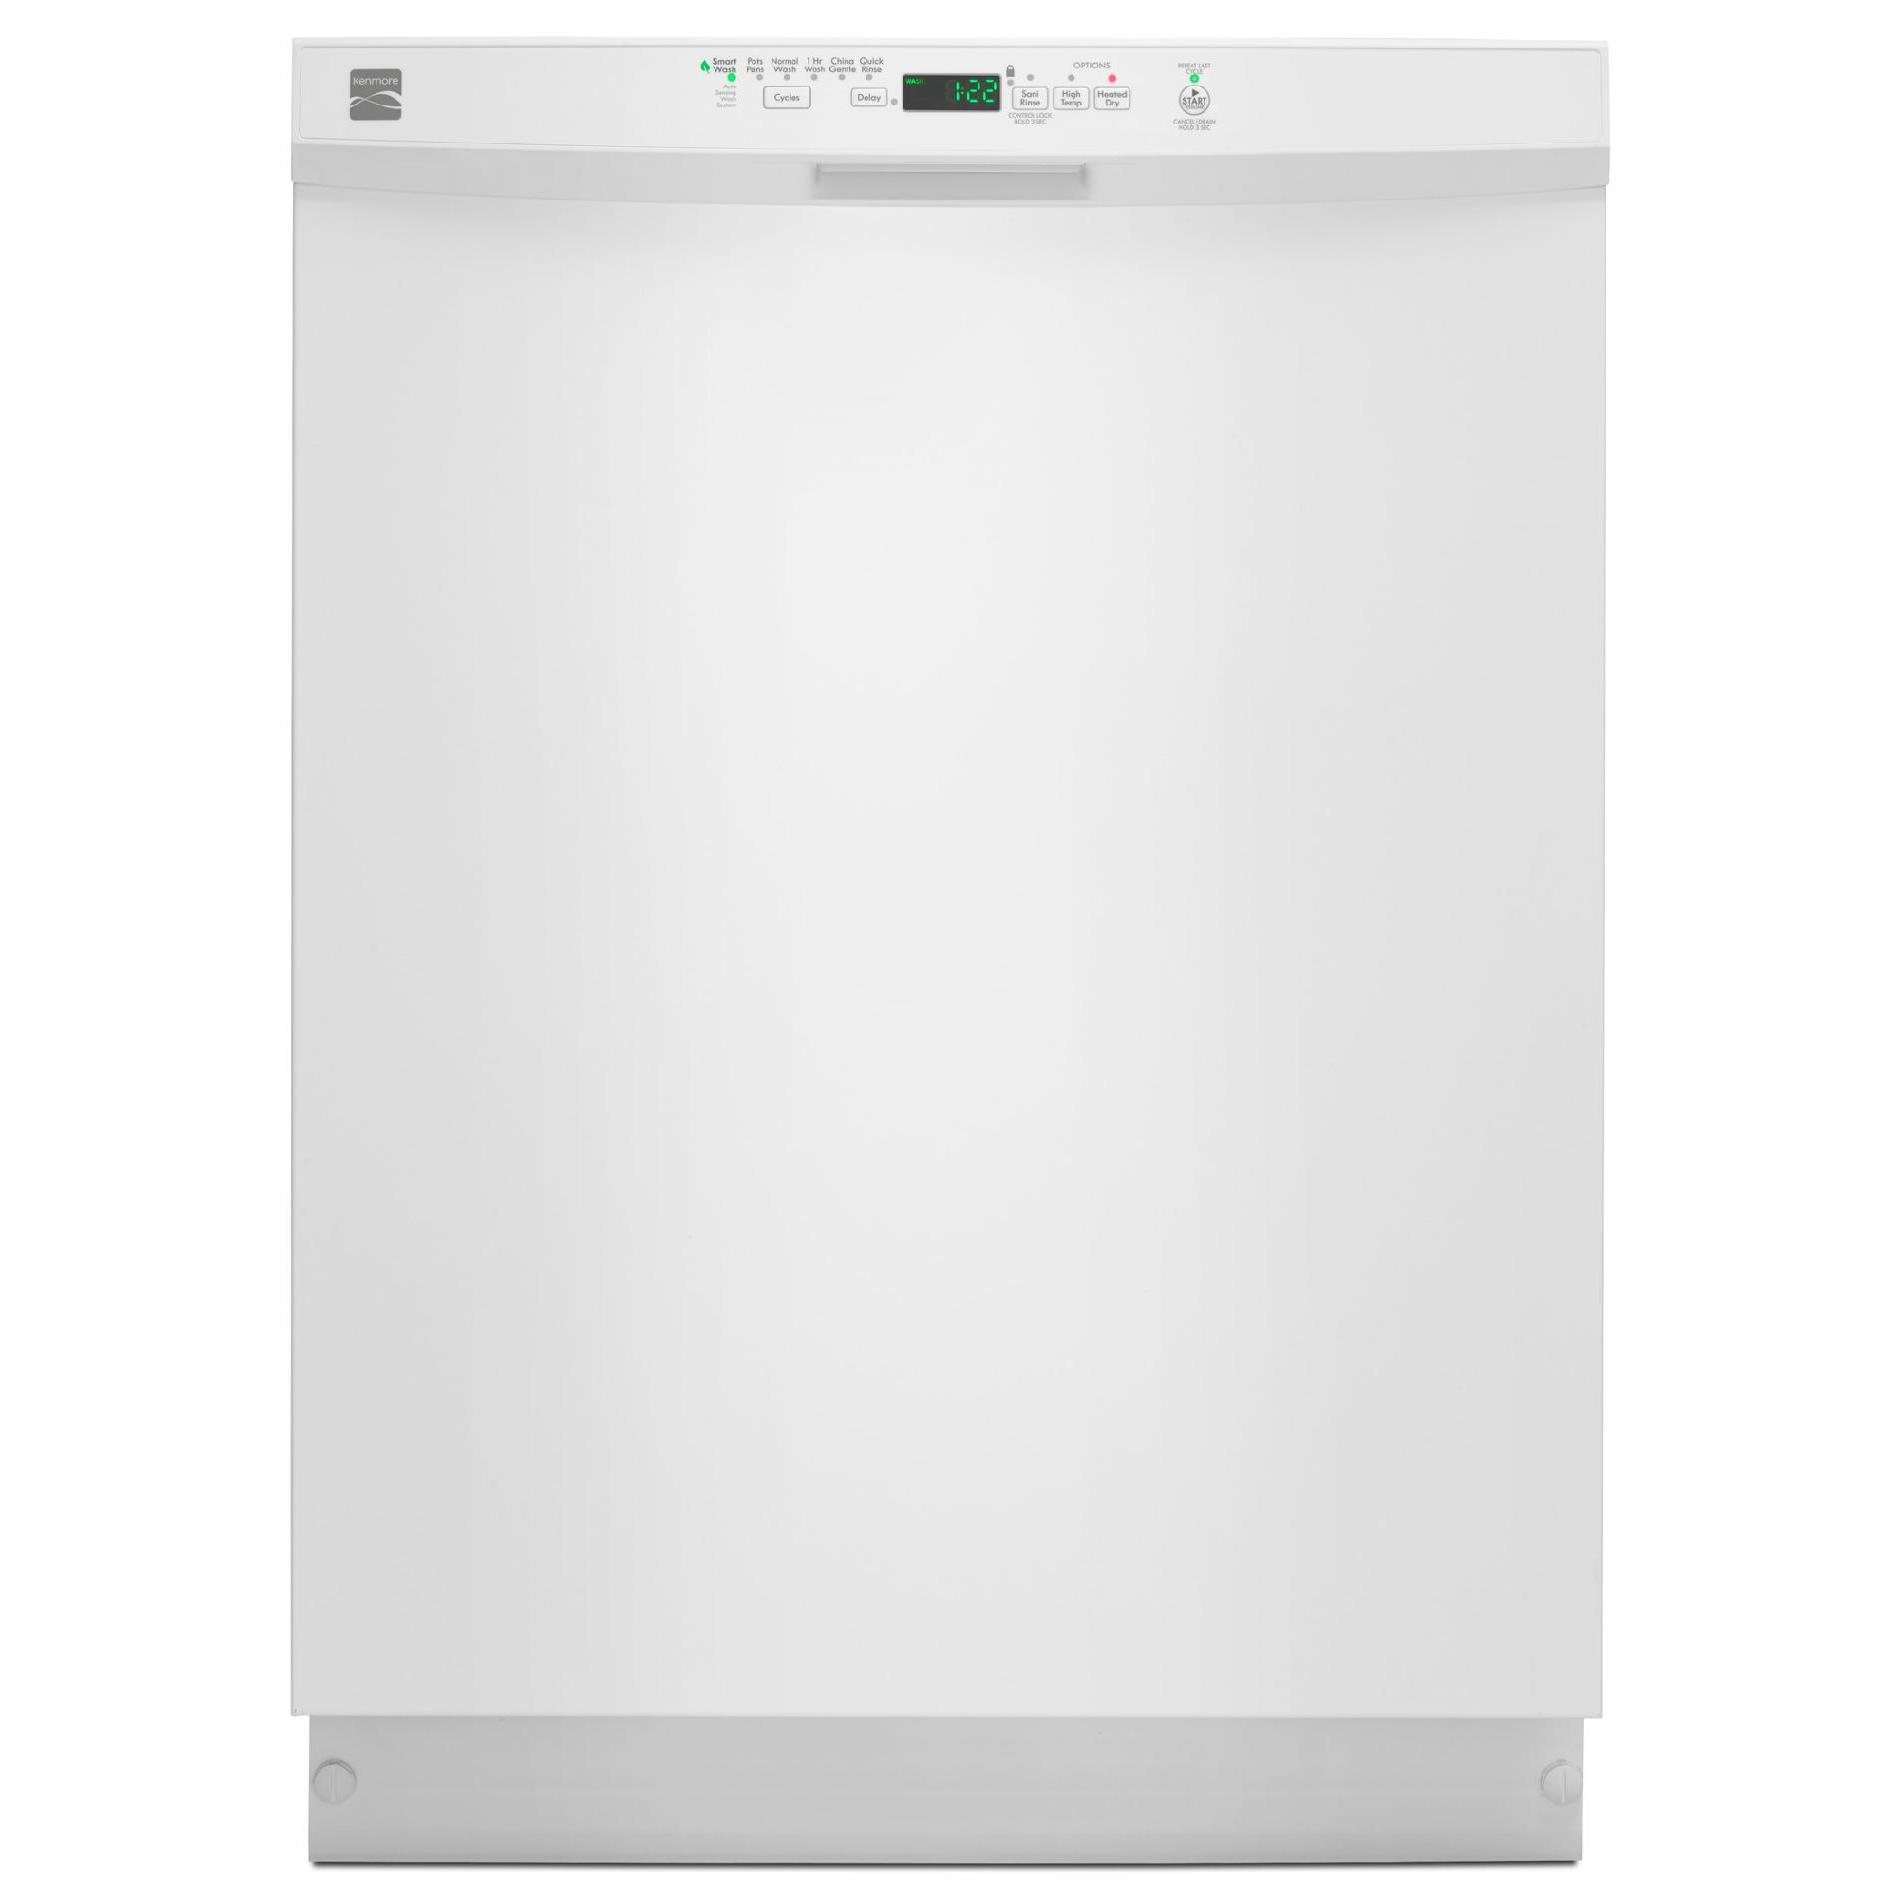 kenmore 665 dishwasher review